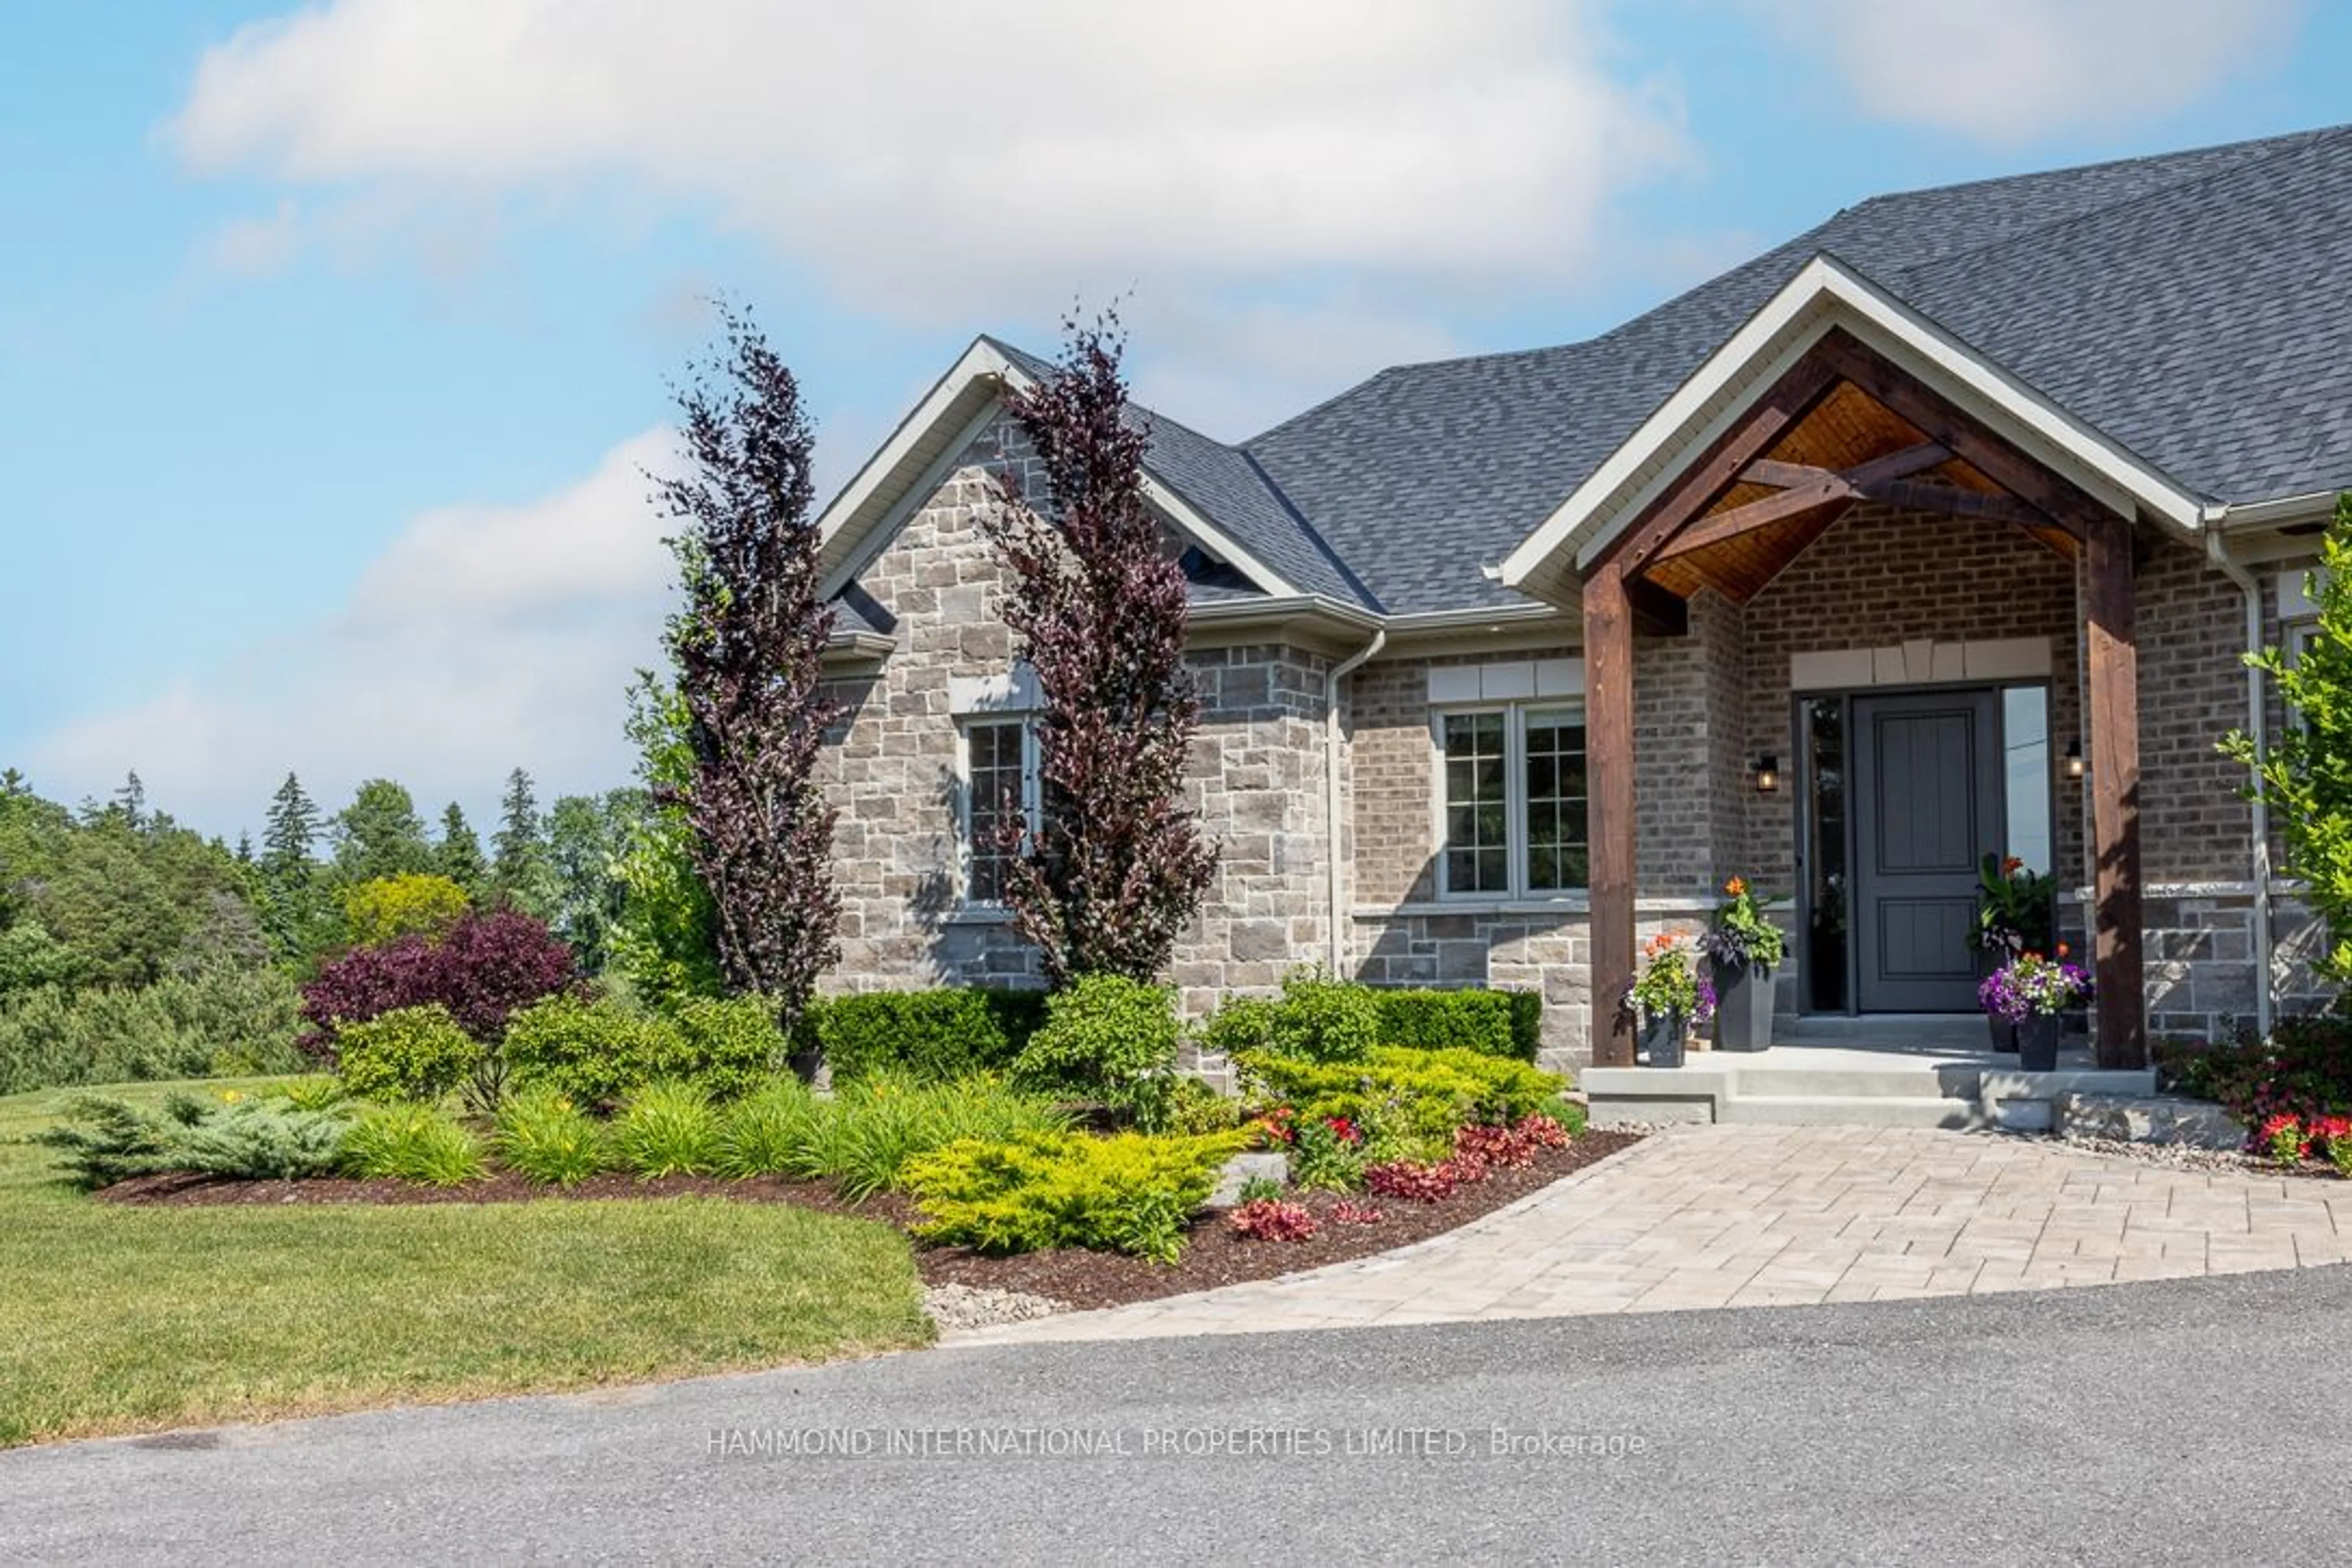 Home with brick exterior material for 1855 Concession Rd9 Blackstock, Clarington Ontario L0B 1B0